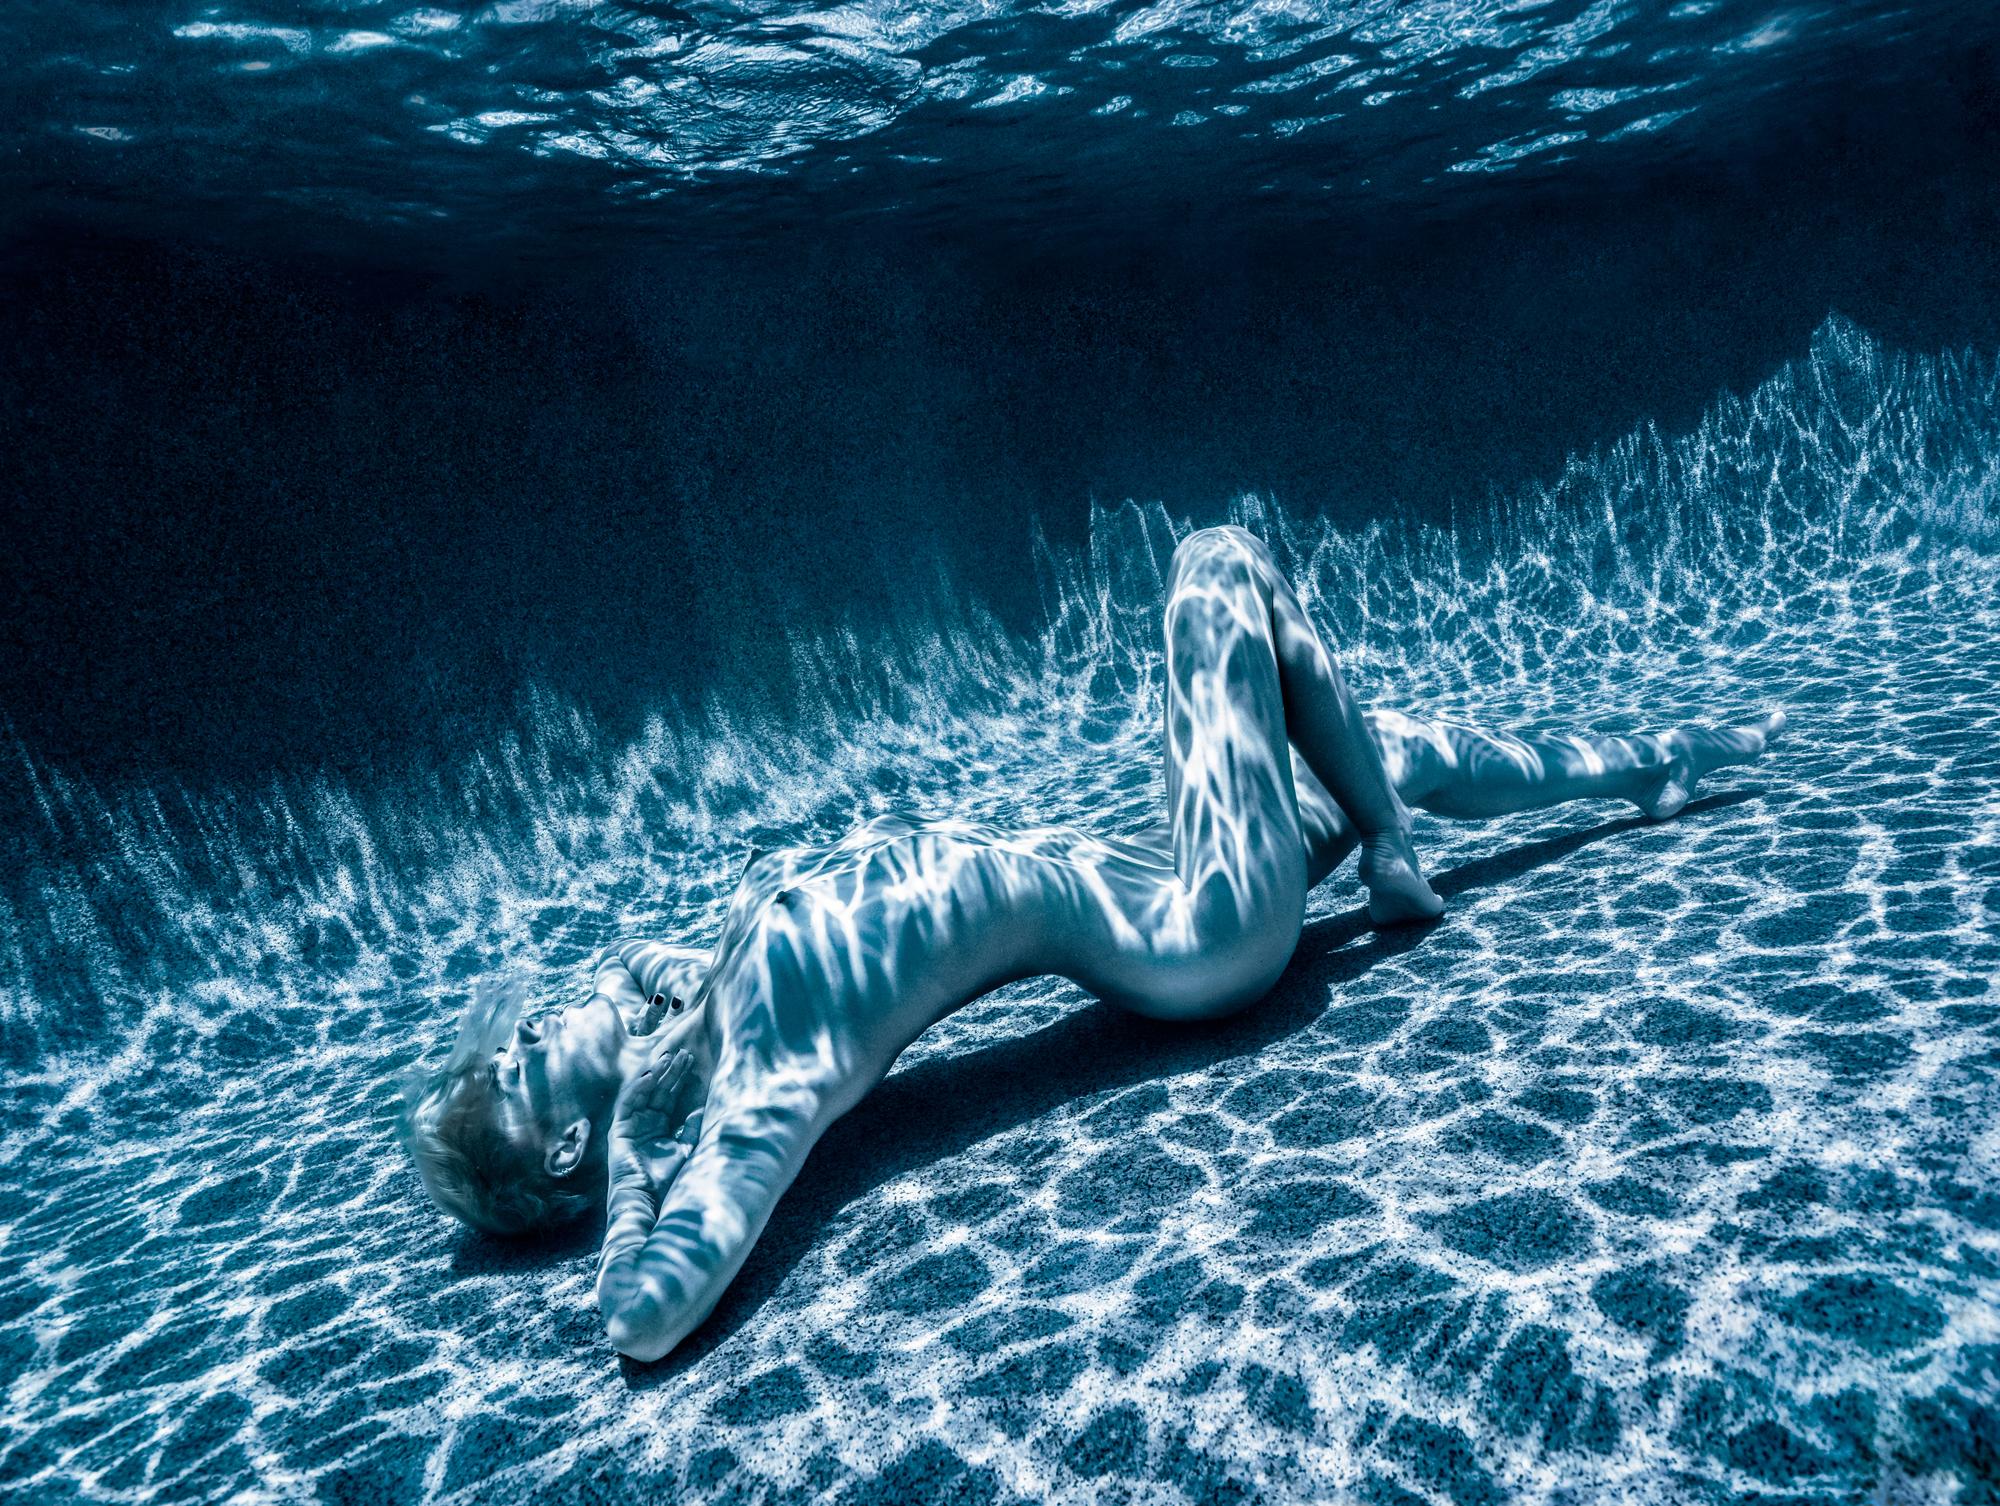 Alex Sher - Moonlight - underwater nude photograph